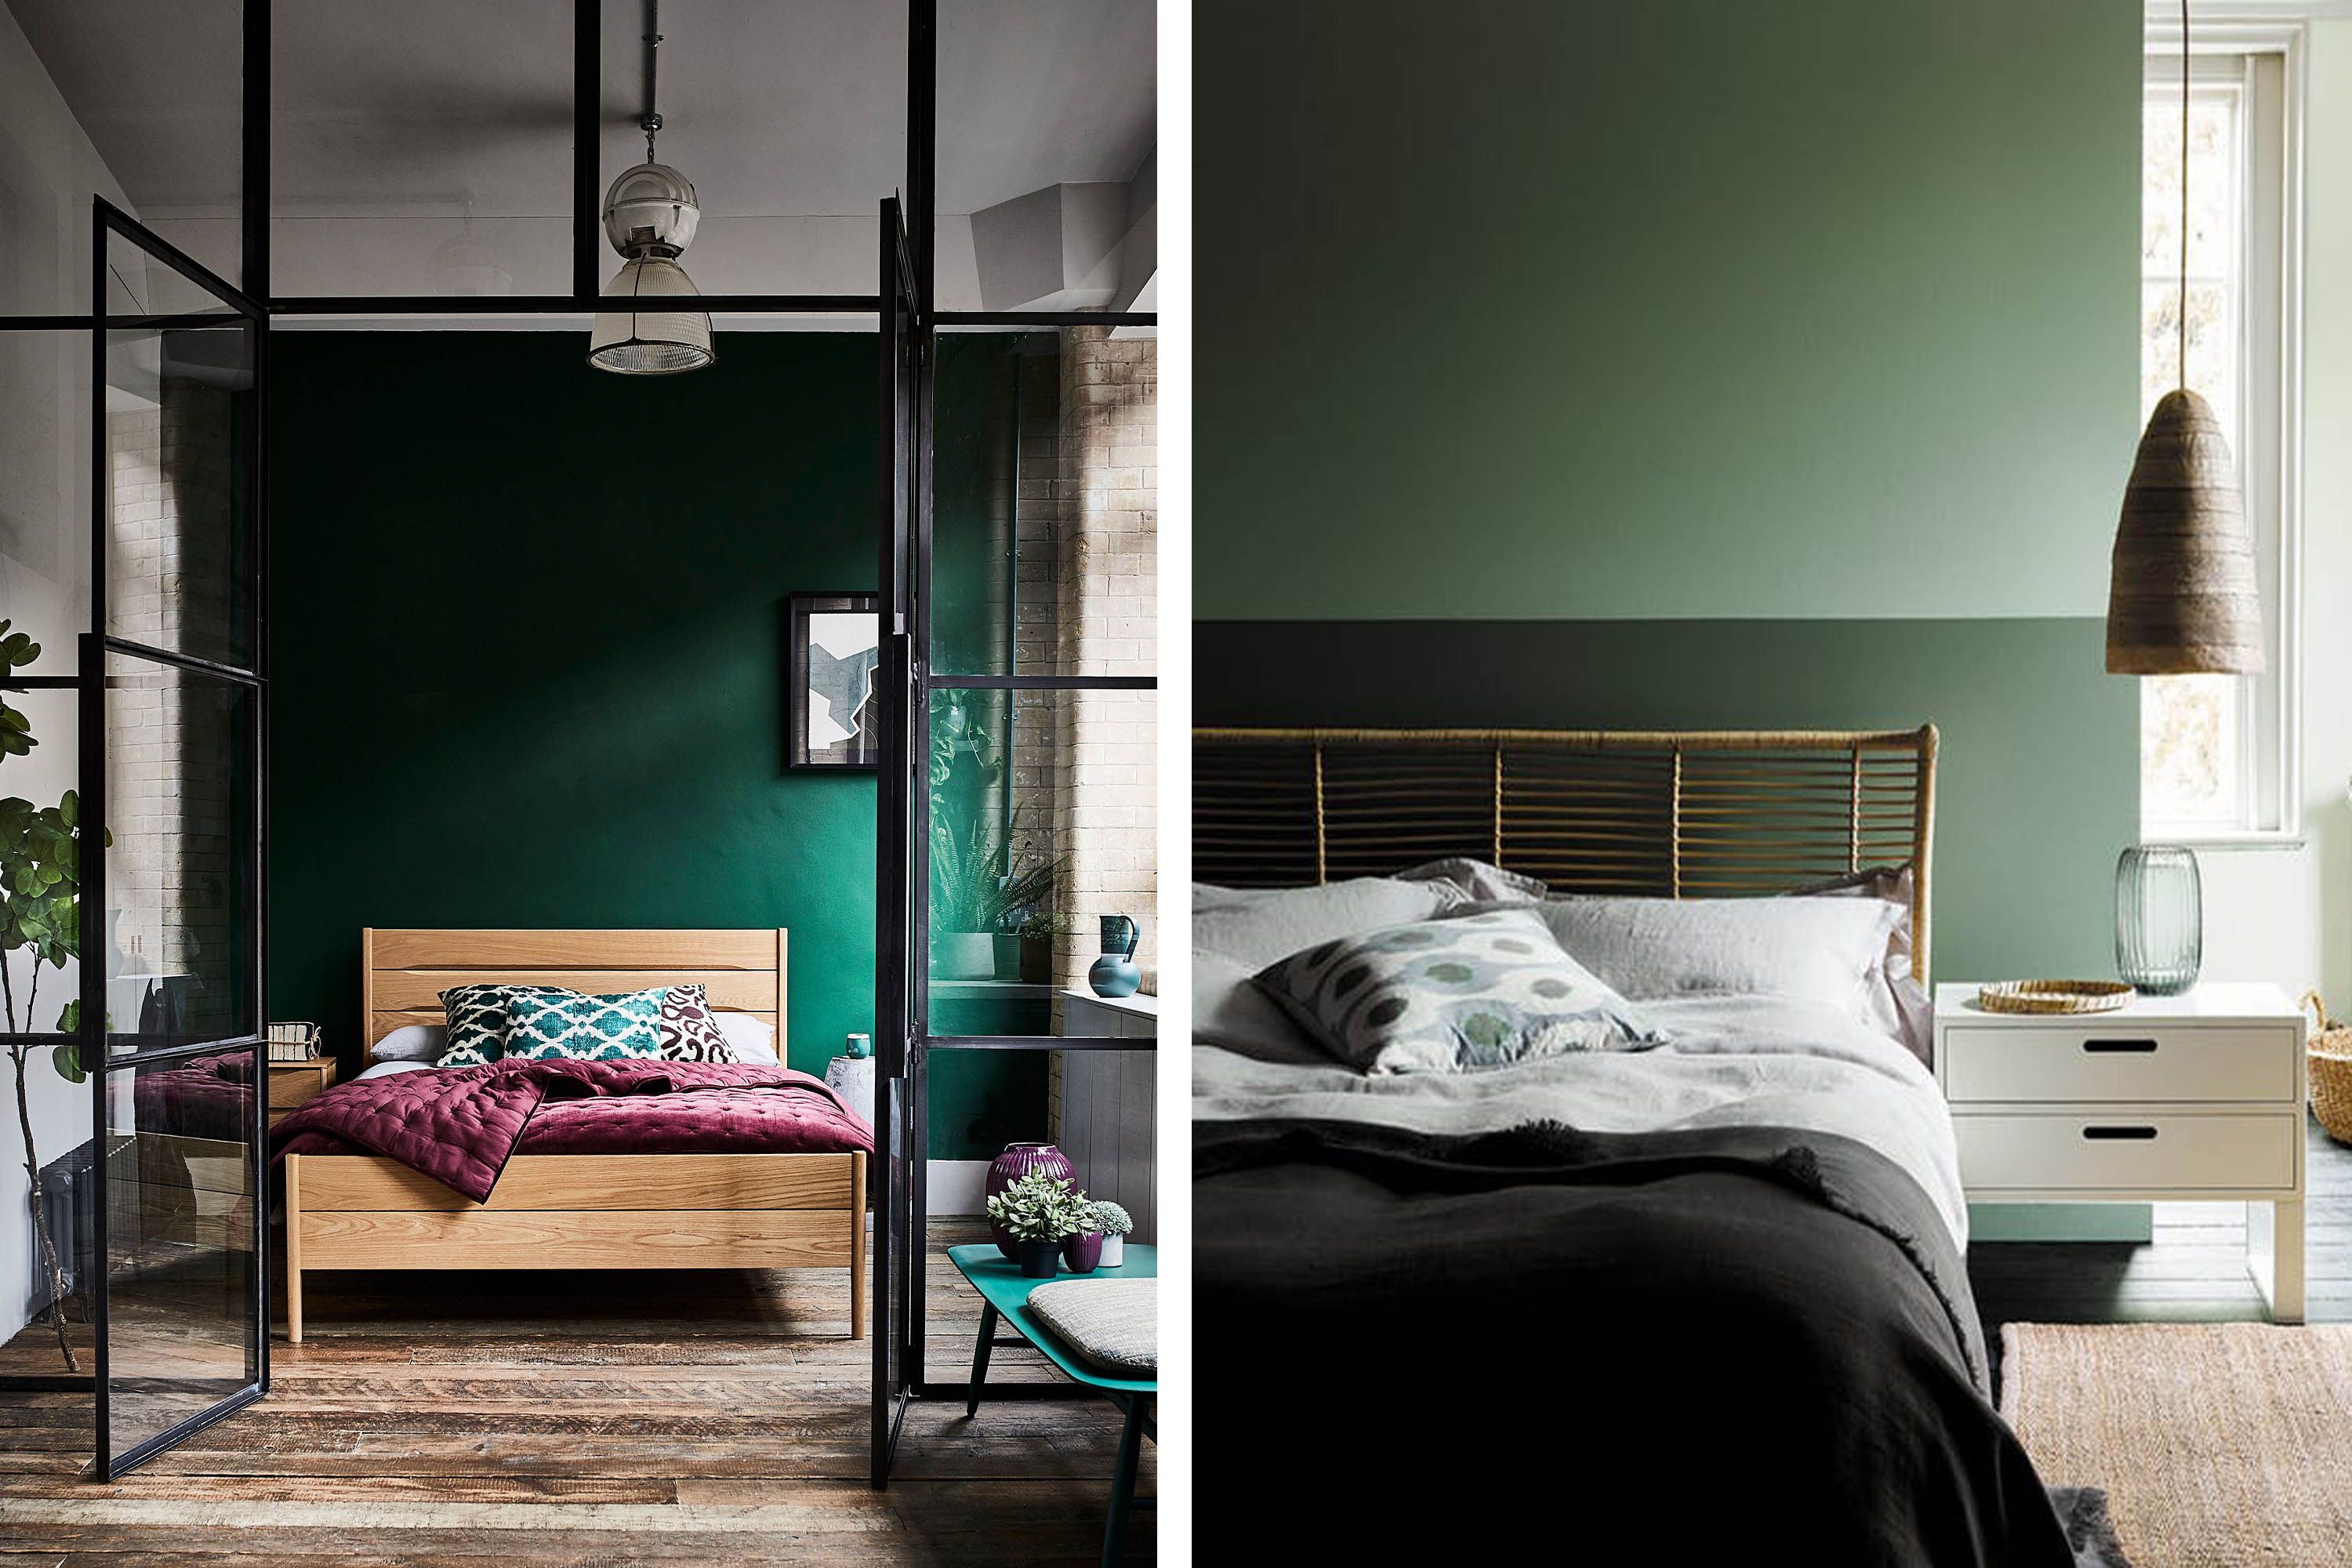 8 Bedroom Colour Ideas - Bedroom Paint Ideas